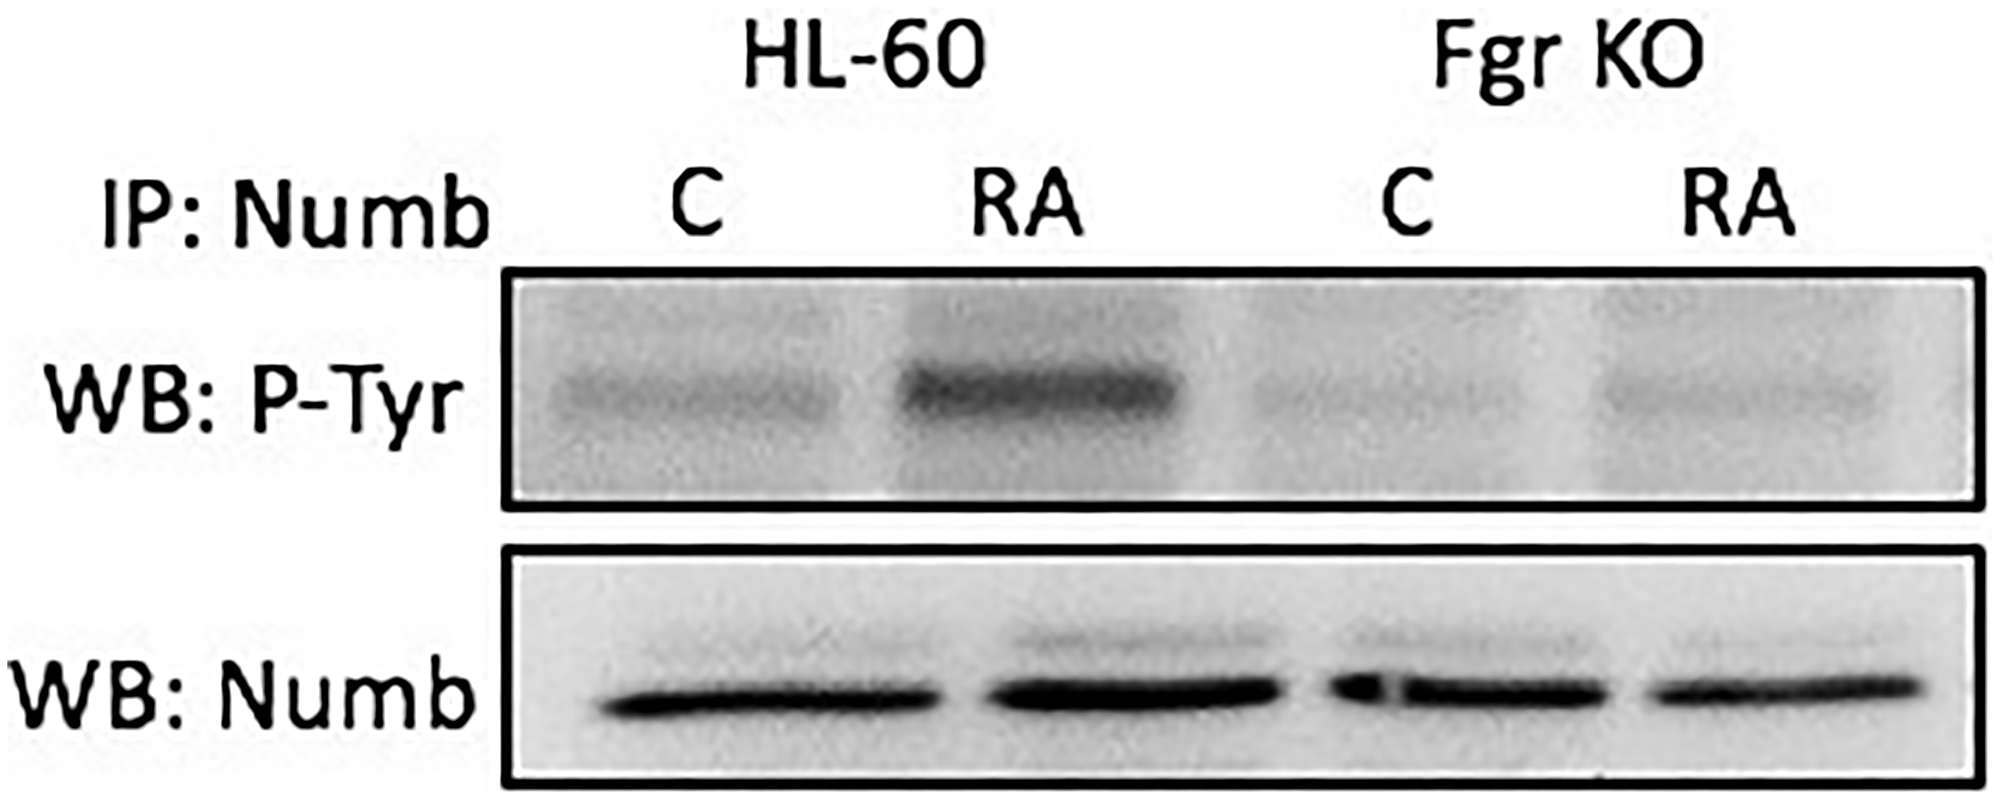 Numb tyrosine phosphorylation in HL-60 wt and Fgr KO cells assessed by immunoprecipitation.